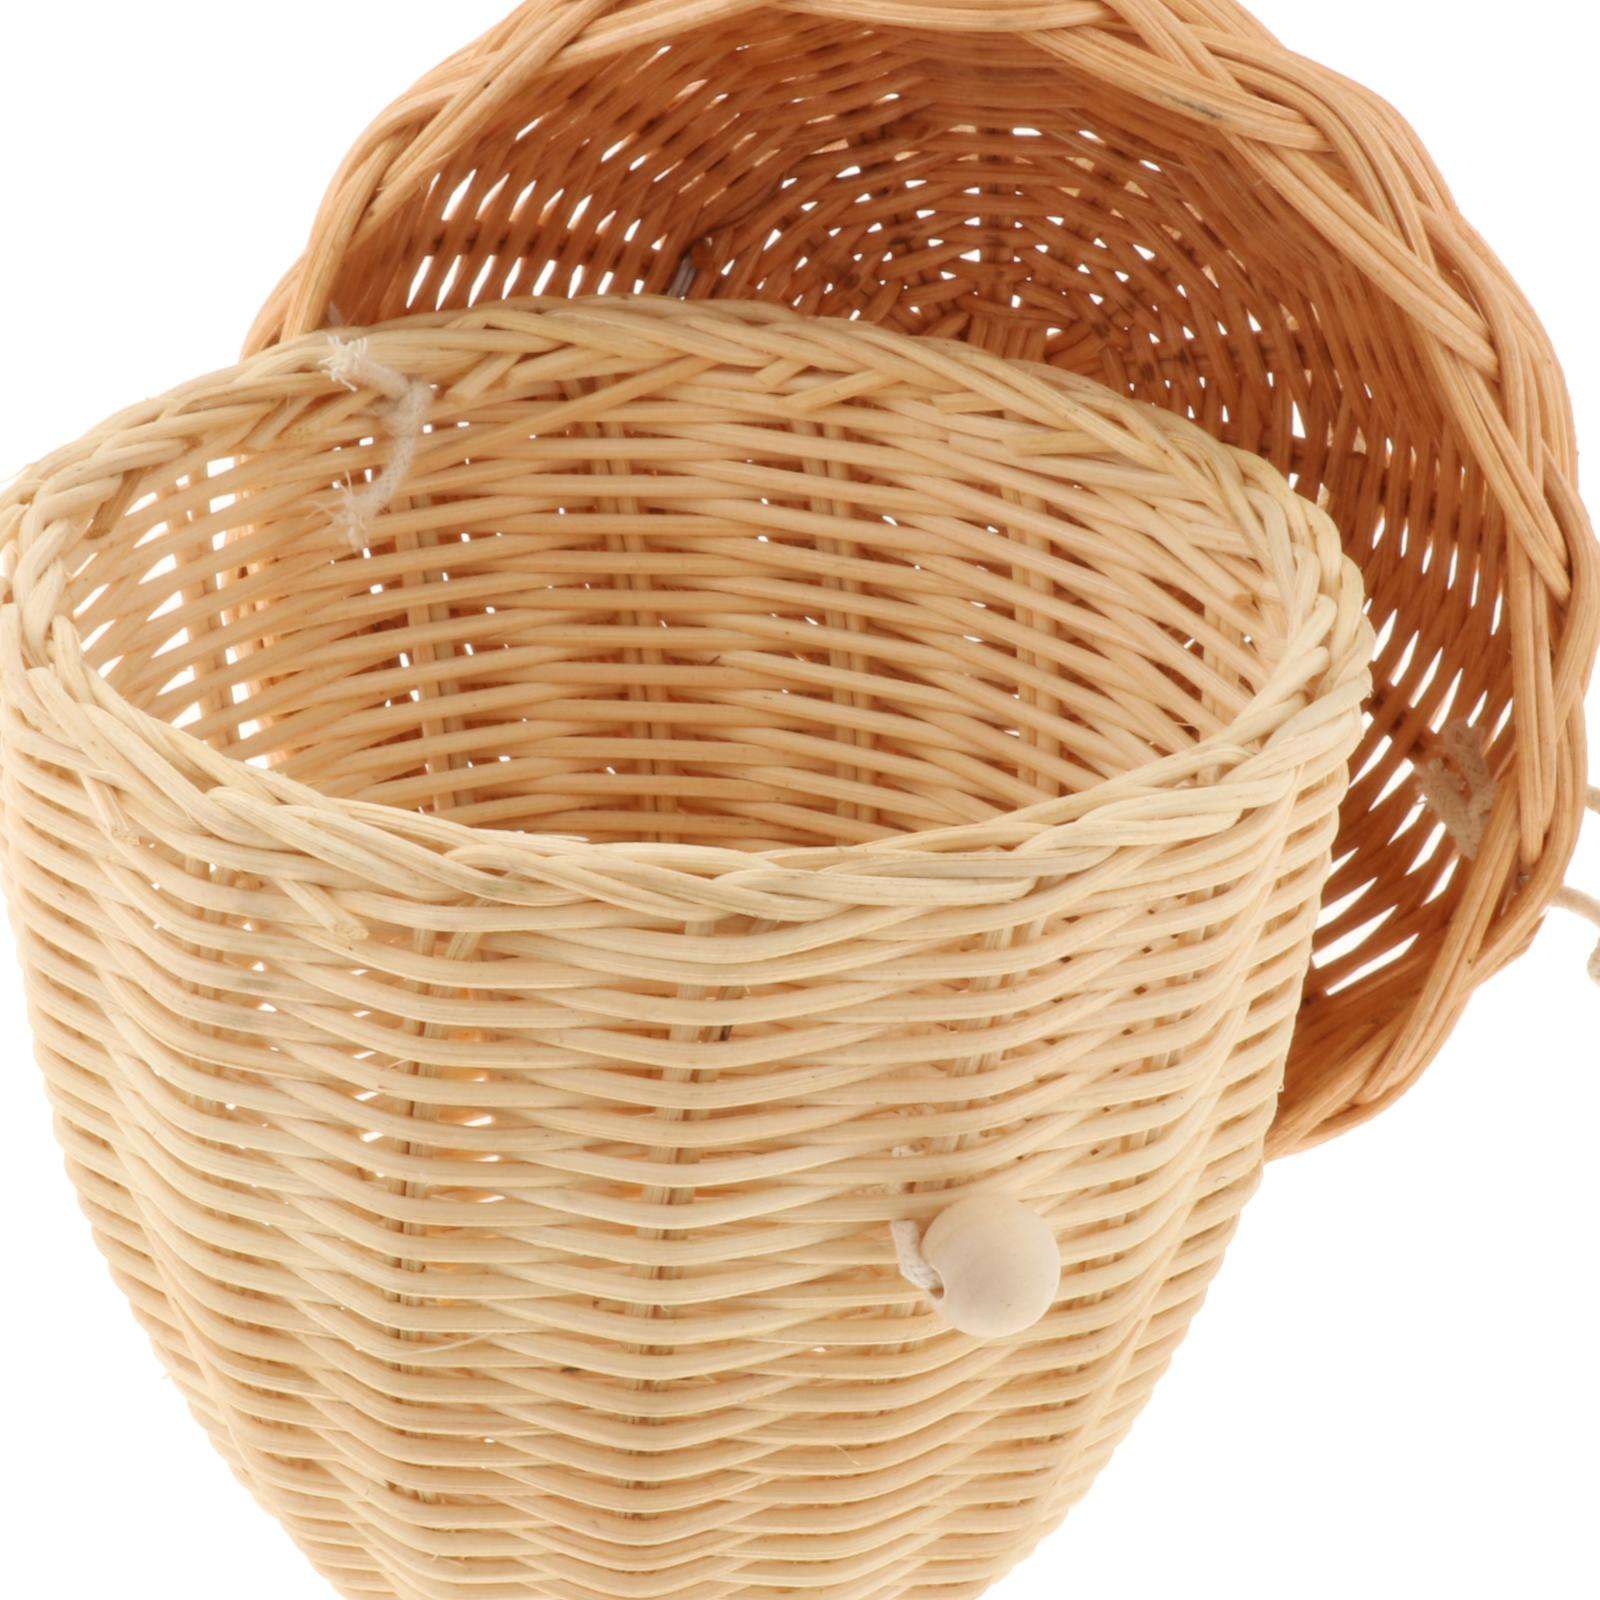 Lady Cute Handmade Woven Rattan Basket with Handles Tote Bucket Kid Room